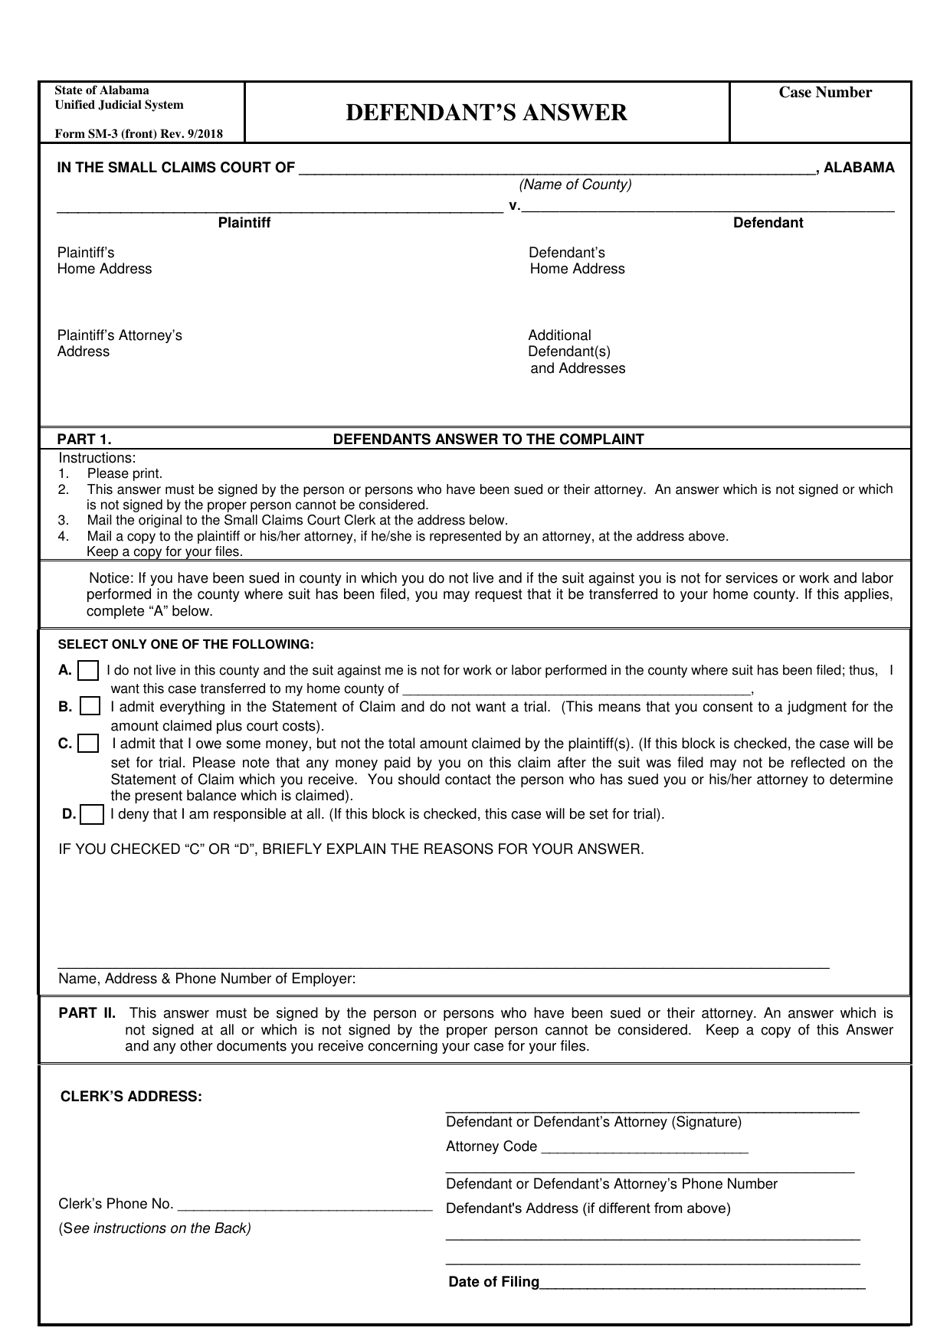 Form SM-3 Defendants Answer - Alabama, Page 1